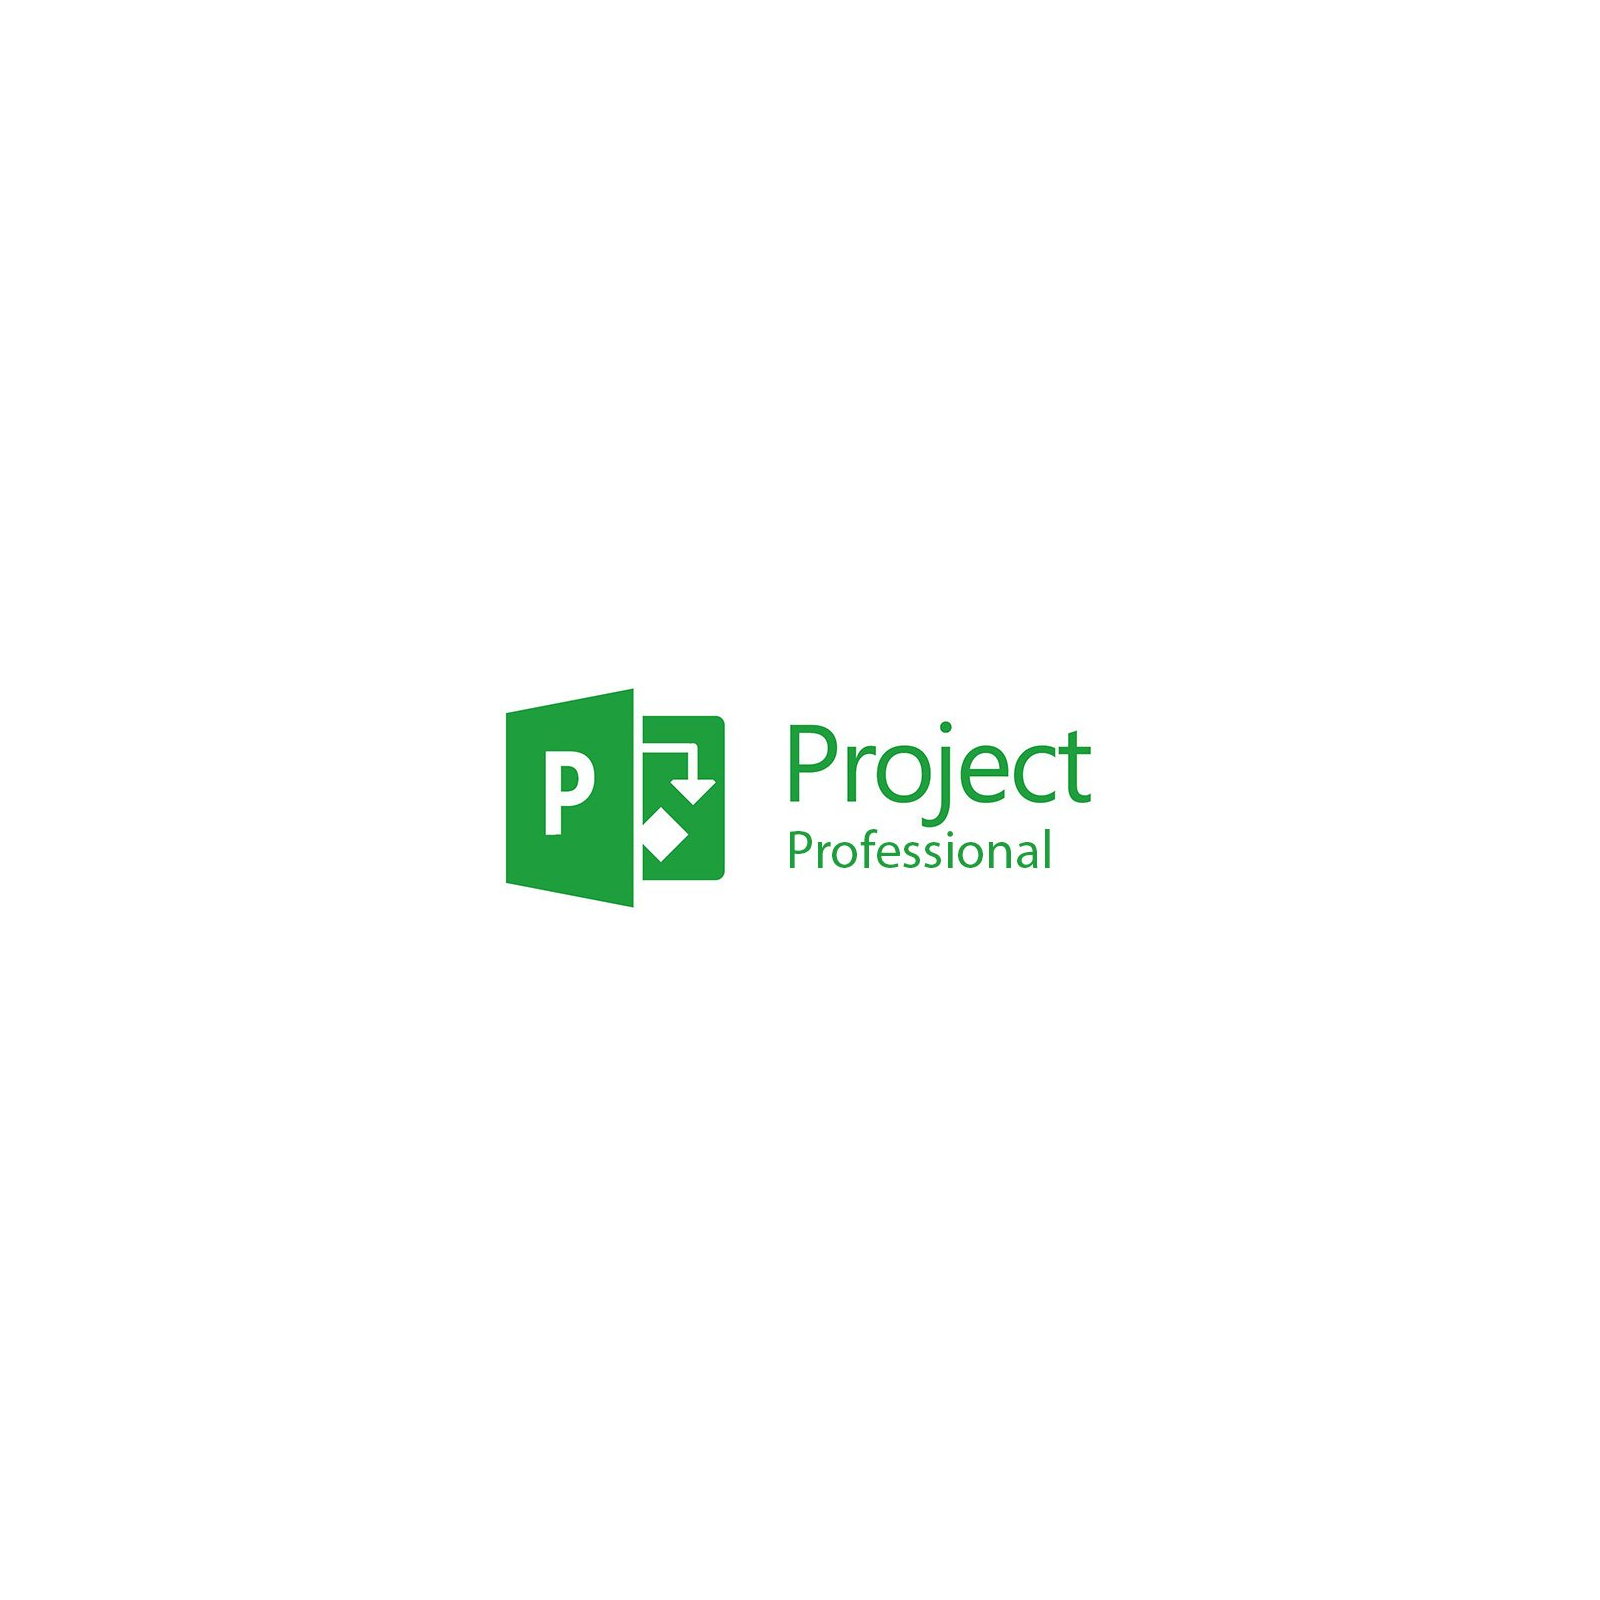 Программная продукция Microsoft PrjctPro 2016 RUS OLP NL Acdmc w1PrjctSvrCAL (H30-05607)